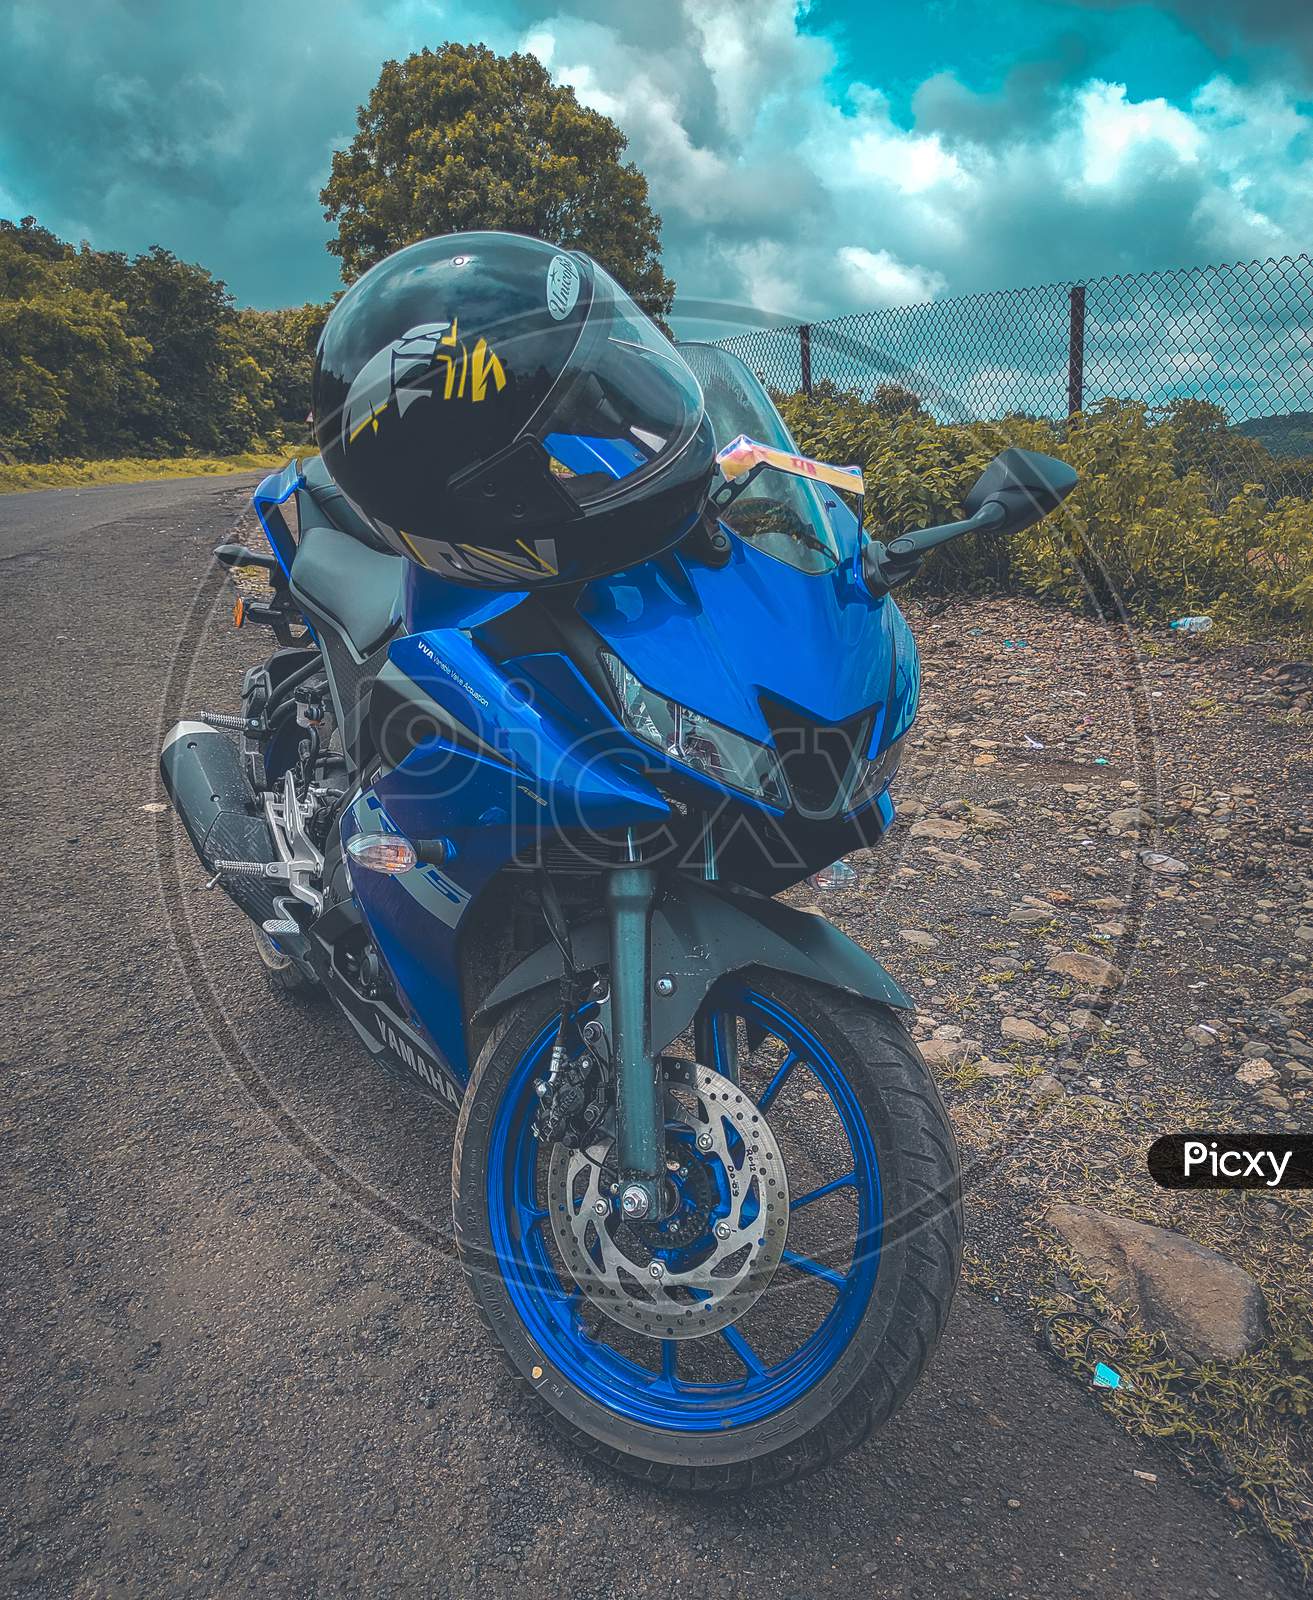 Yamaha's R15V3 bike in blue .